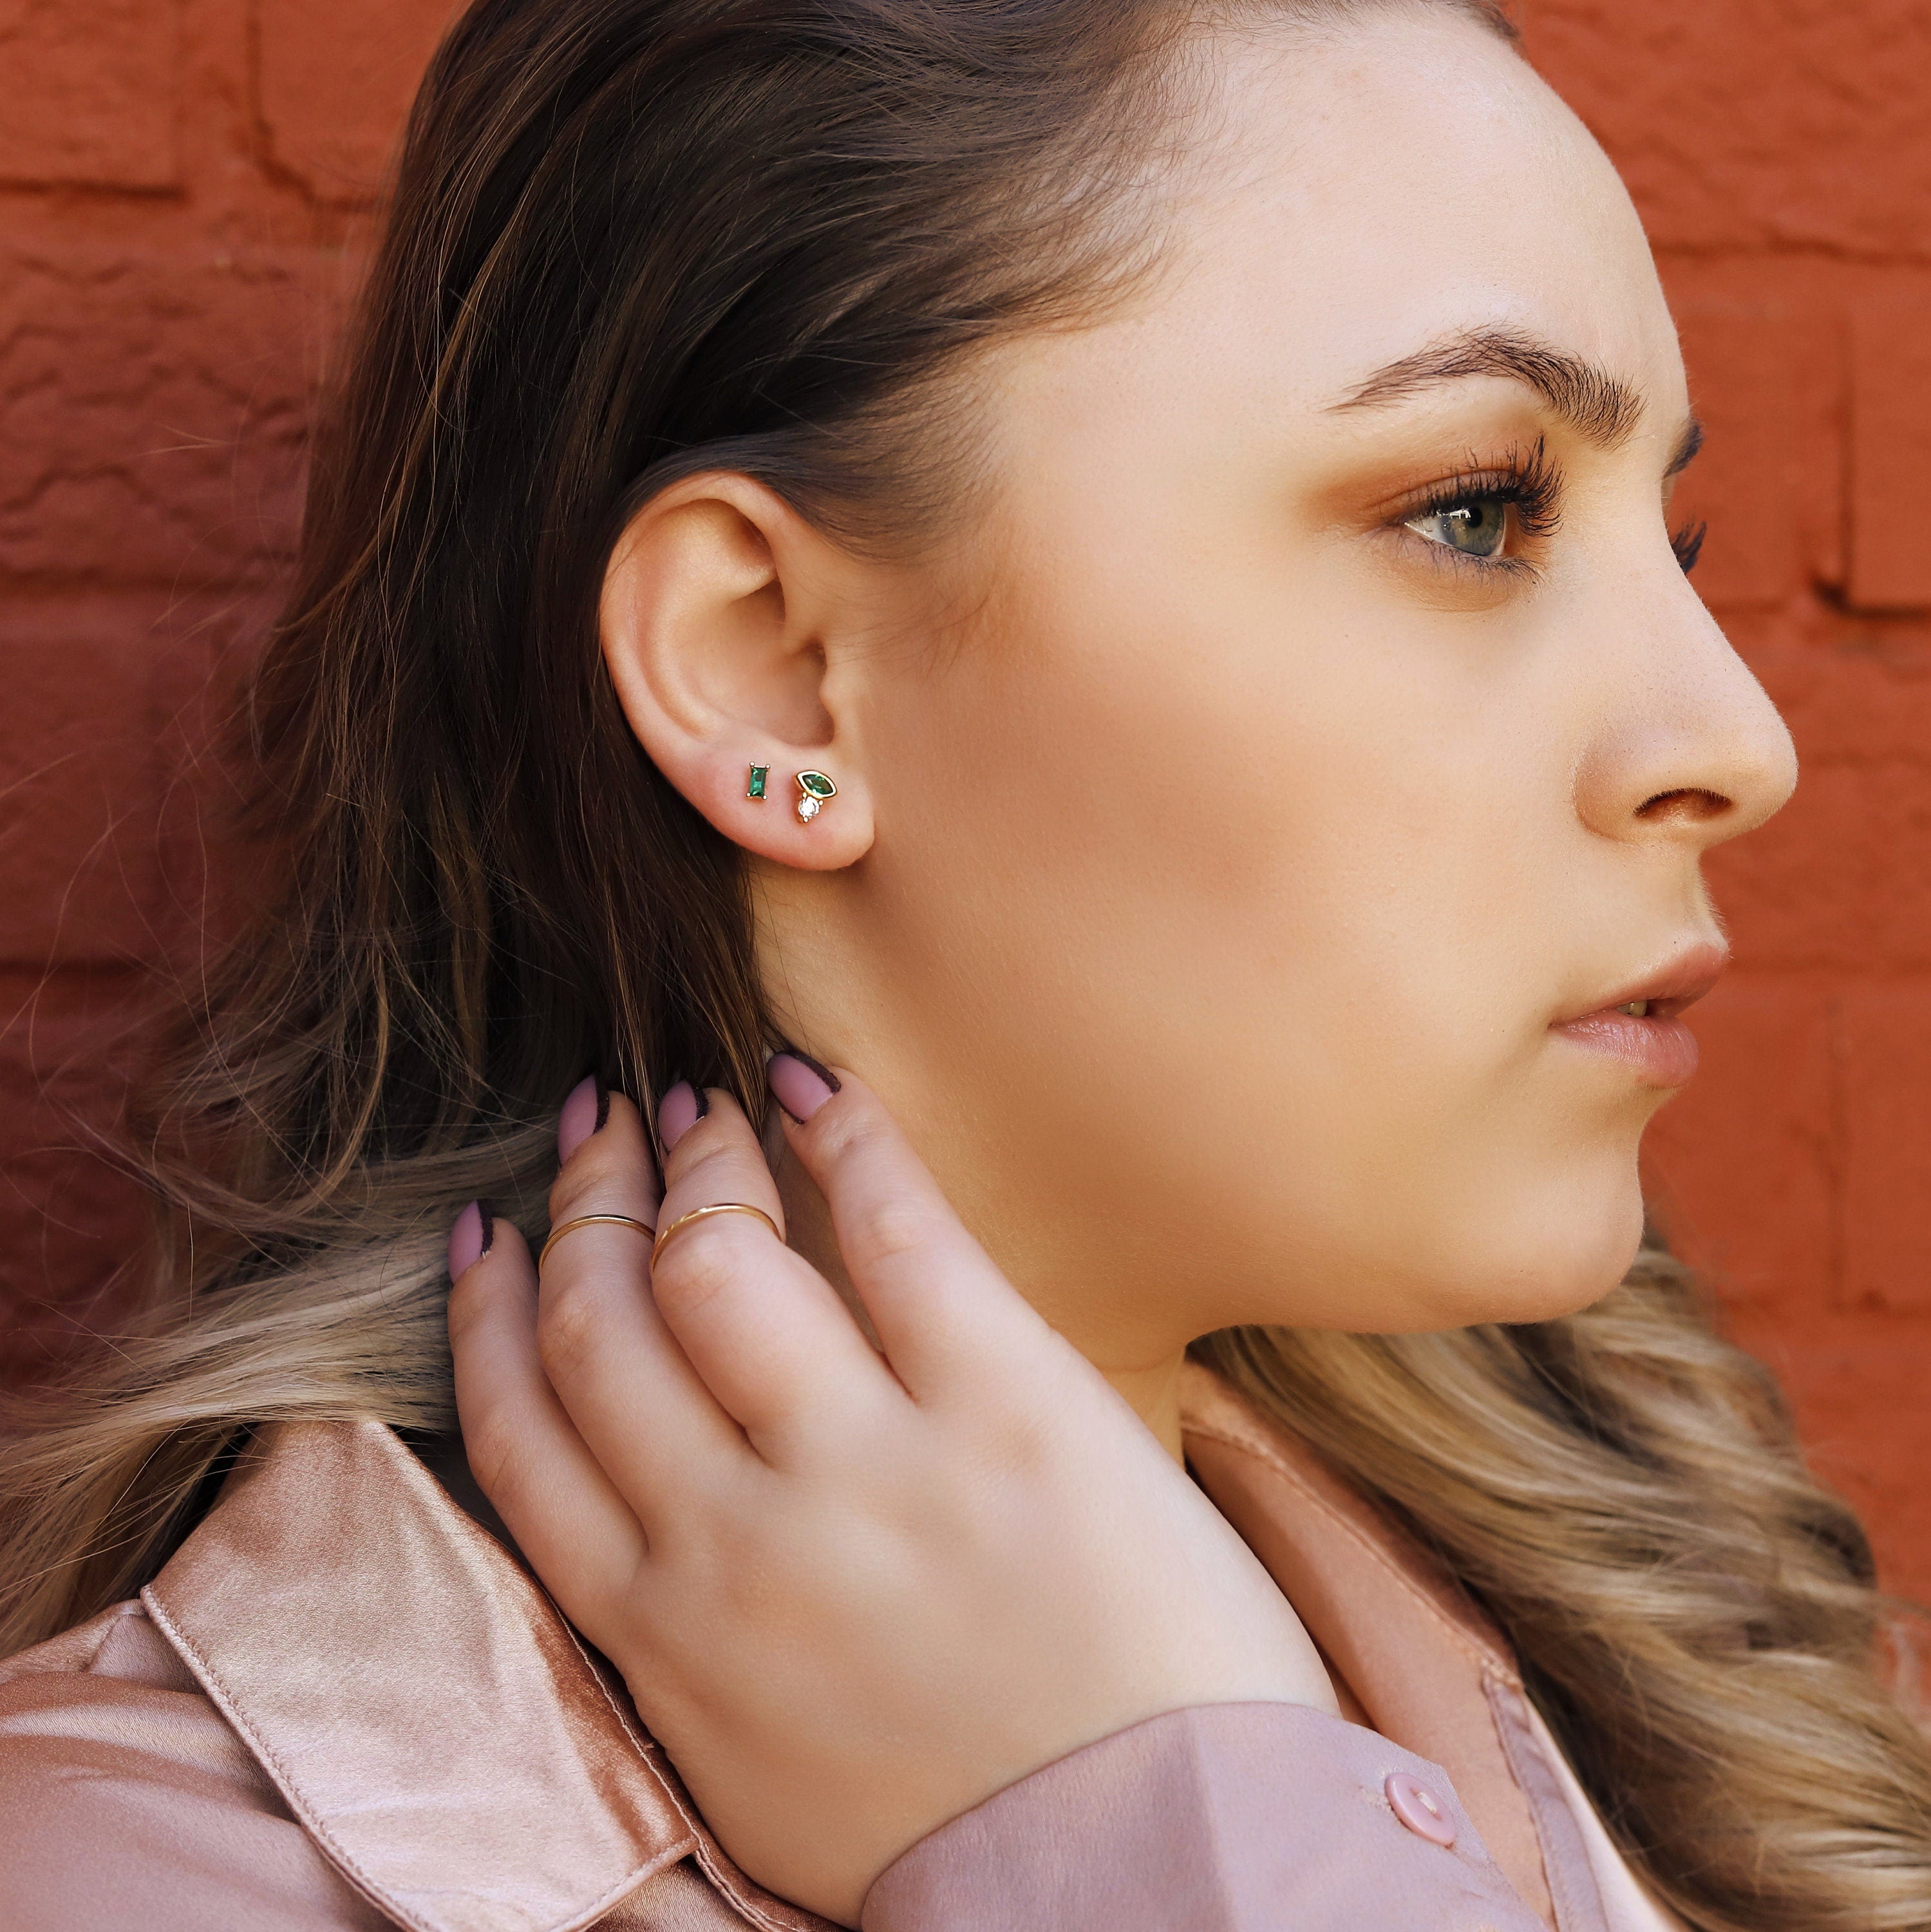 Tiny Stud Earrings - New Minimalist Earrings - Minimalist Earrings - Eye Studs - Tiny Earrings - Earrings Sets for Multiple Piercings